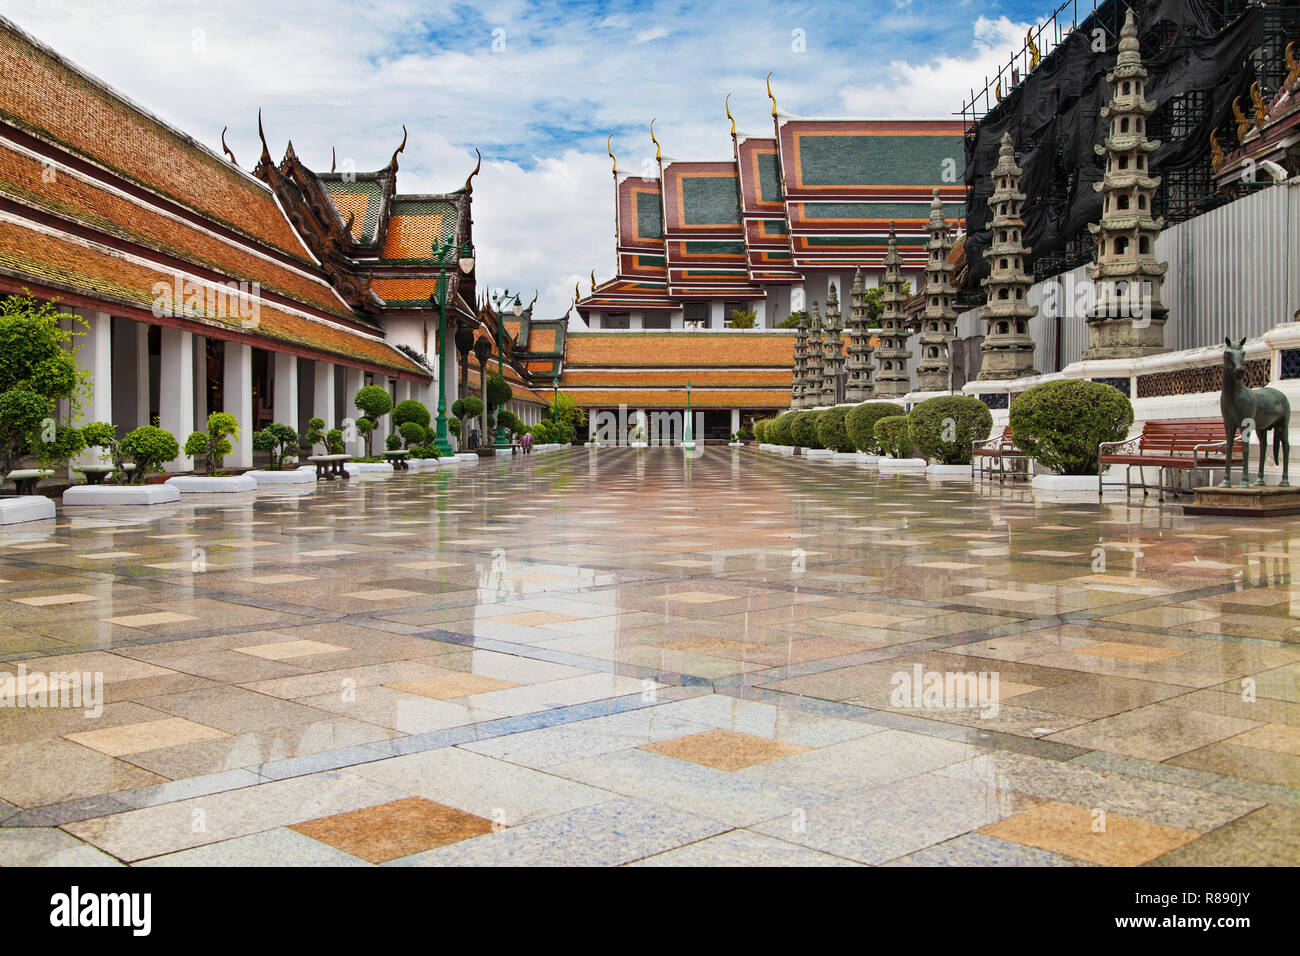 Courtyard of the Main Chapel of the Wat Suthat, Bangkok, Thailand. Stock Photo